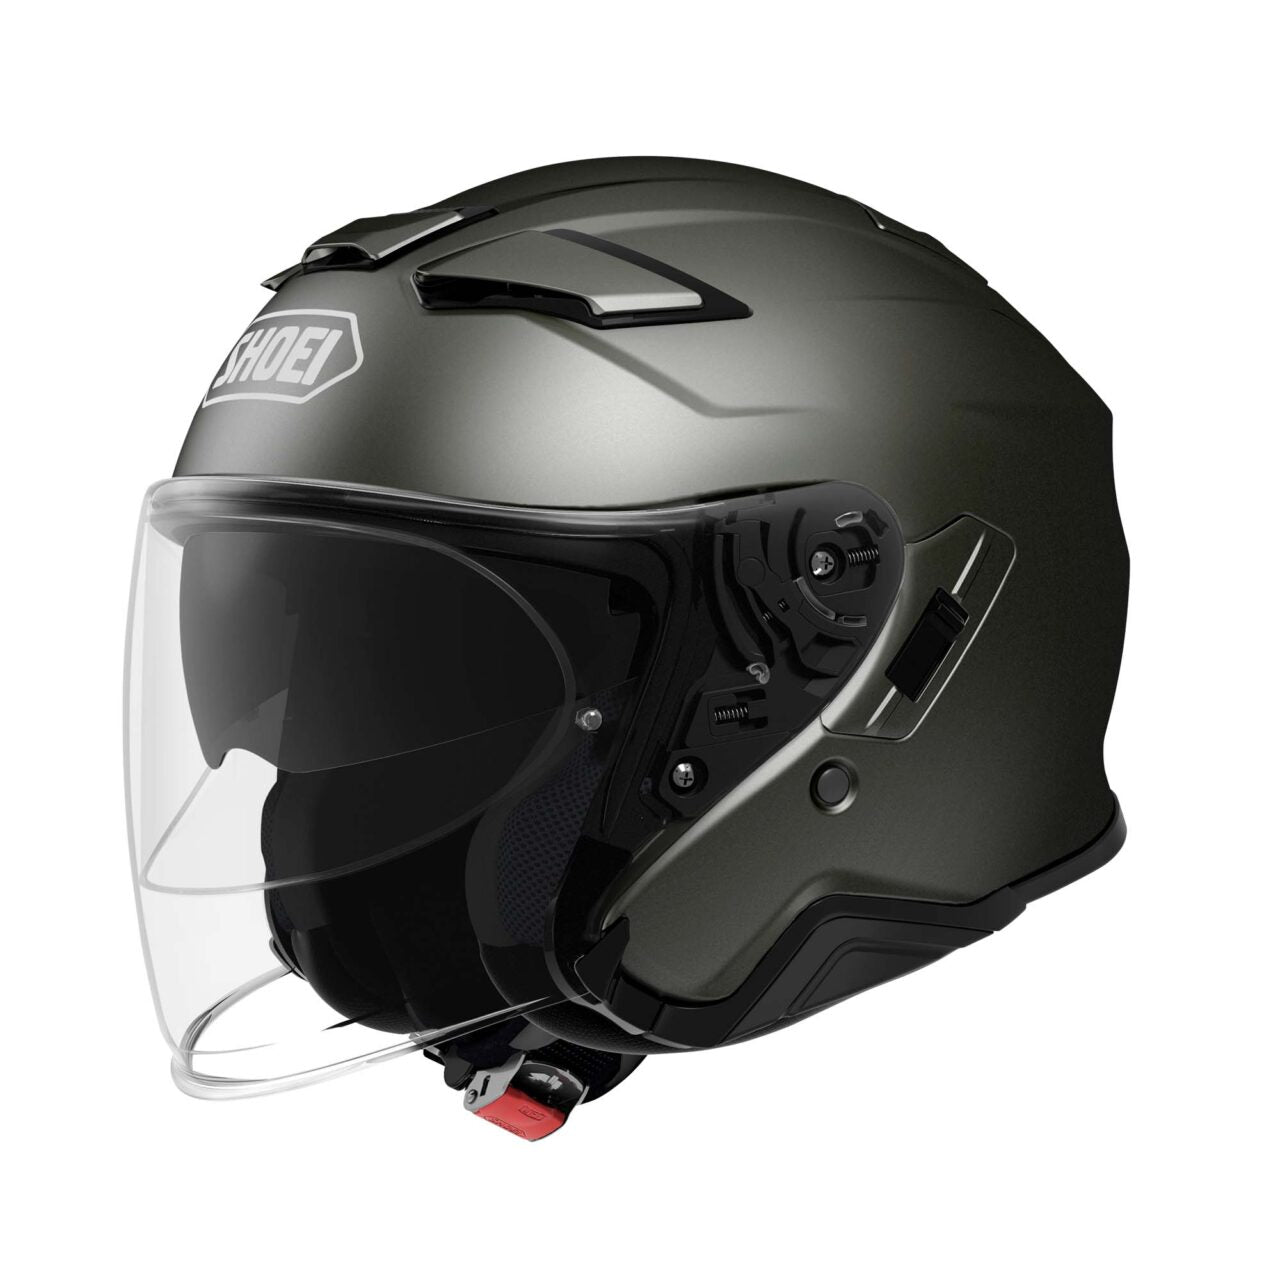 SHOEI J-Cruise II Helmet - Anthracite Black